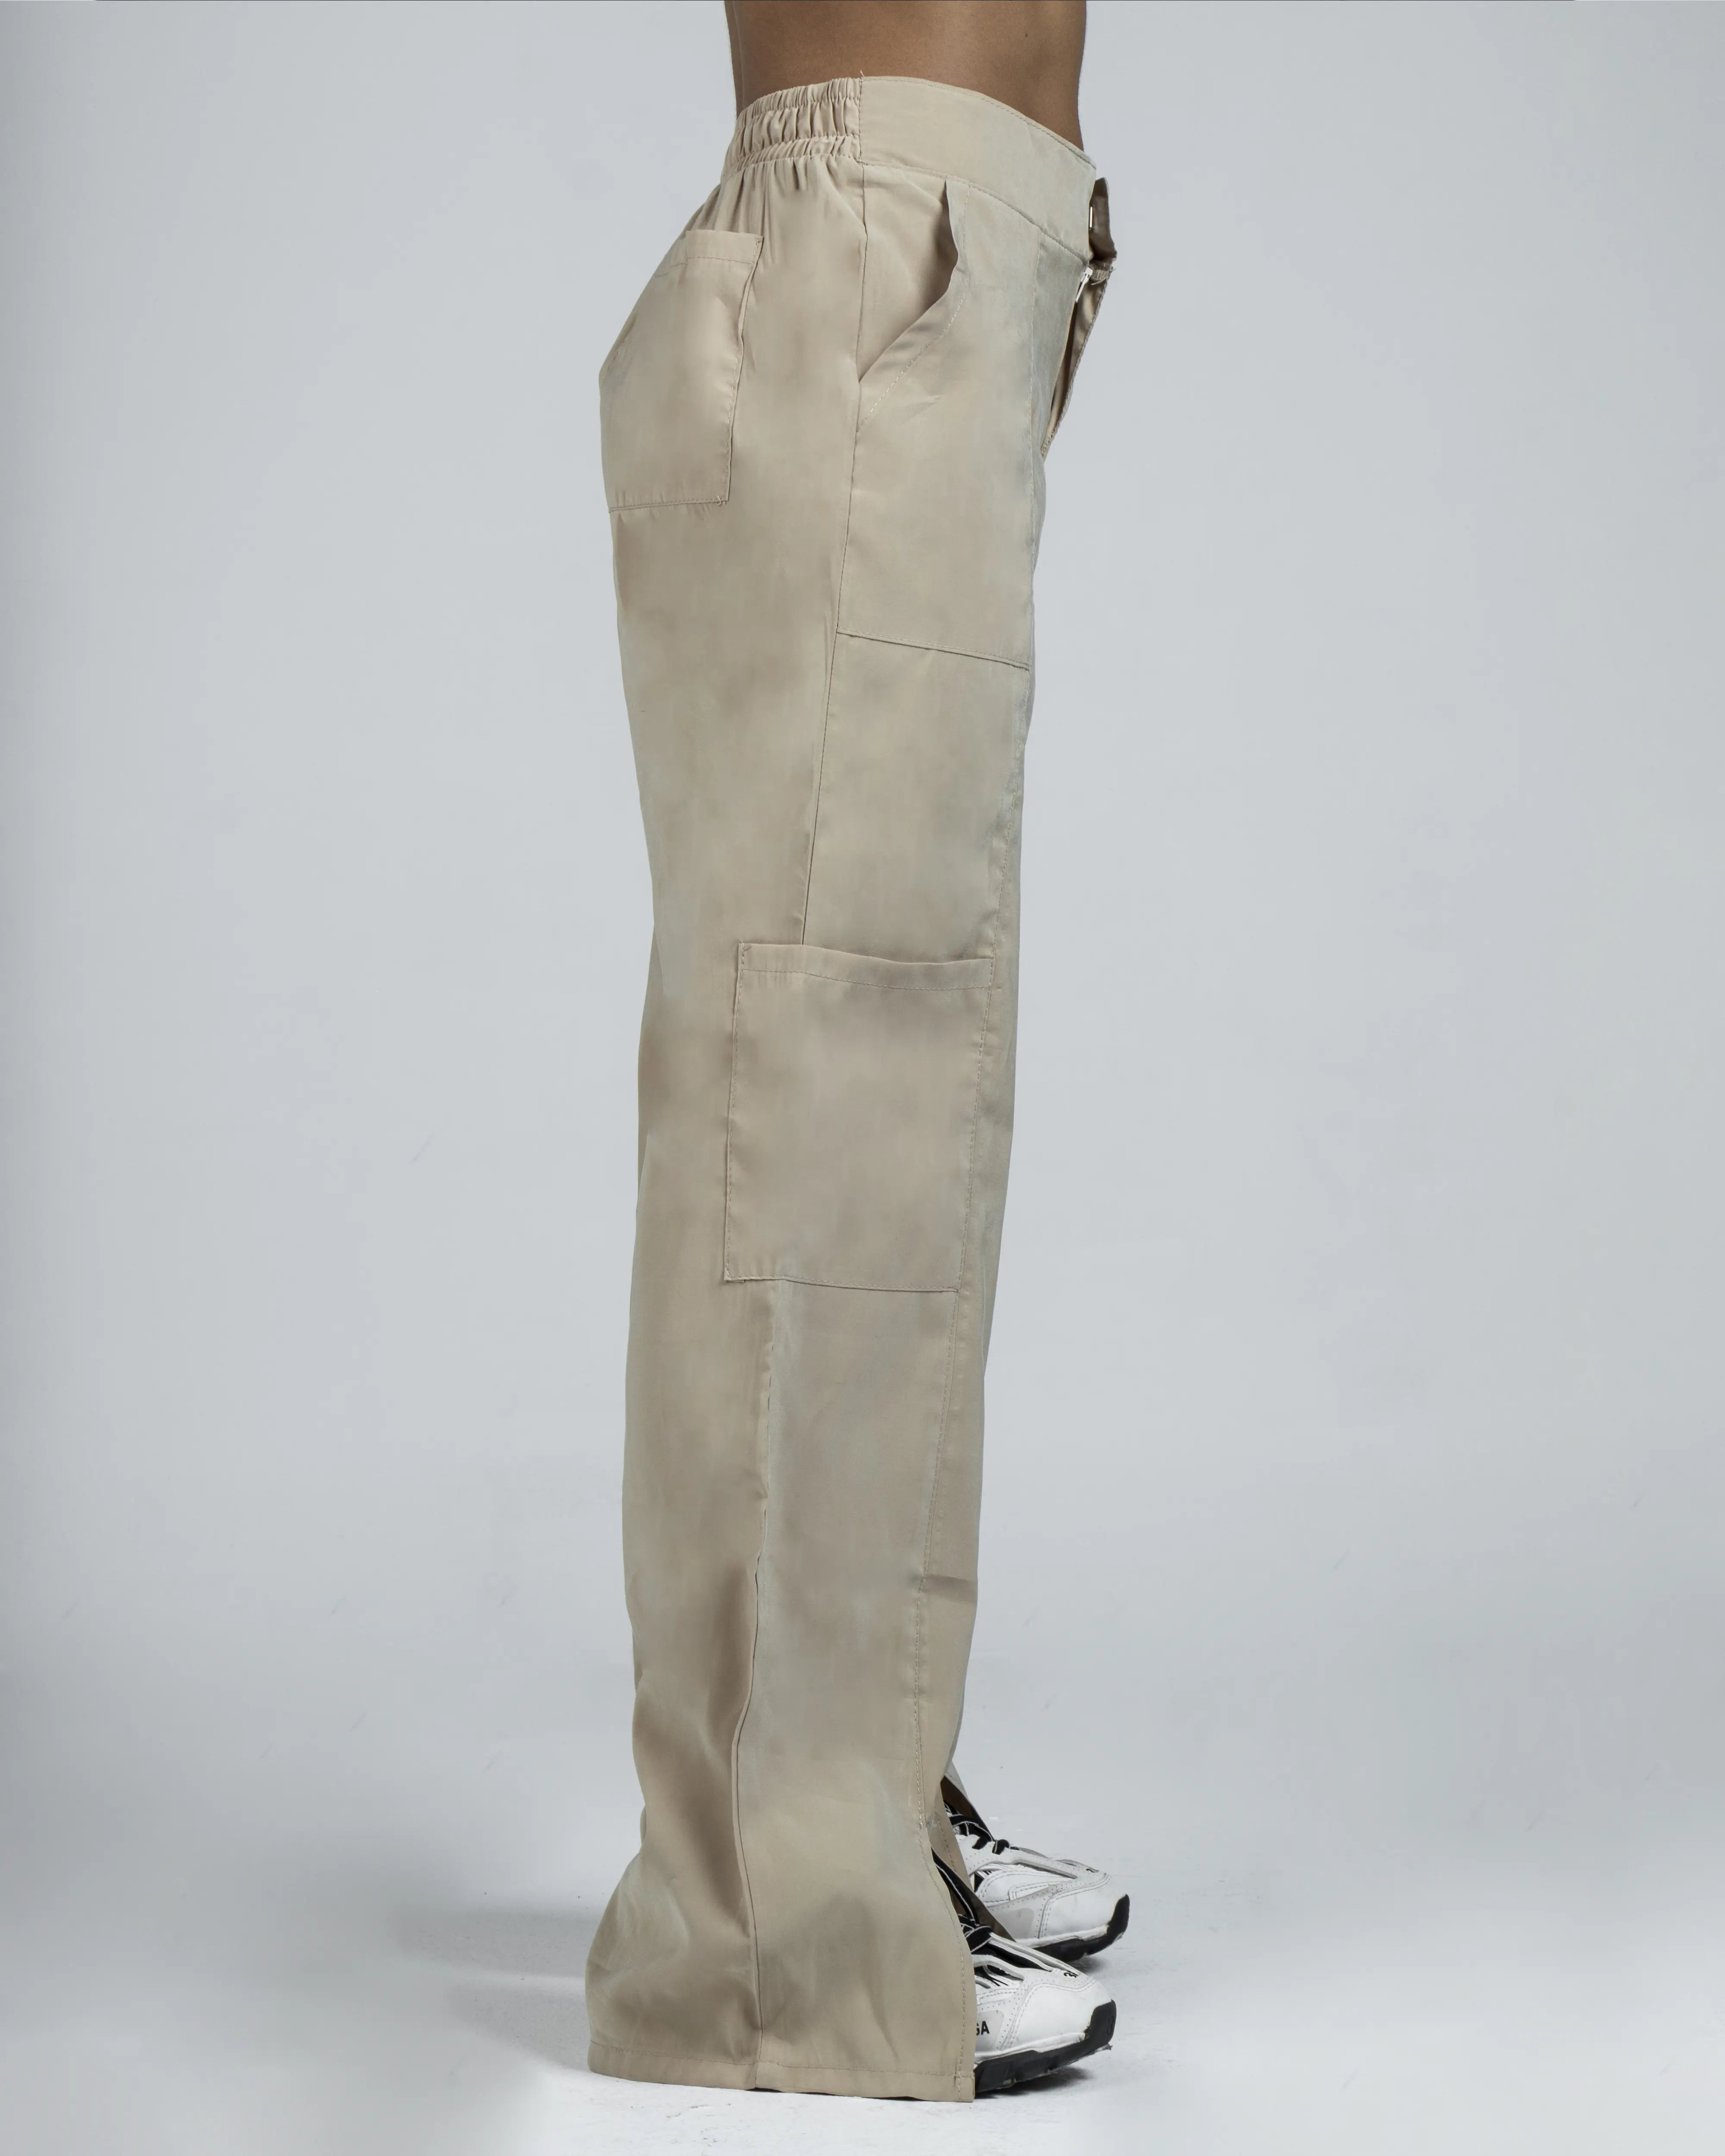 Schık-pantalones de LICRA de gran tamaño para mujer, tela caqui